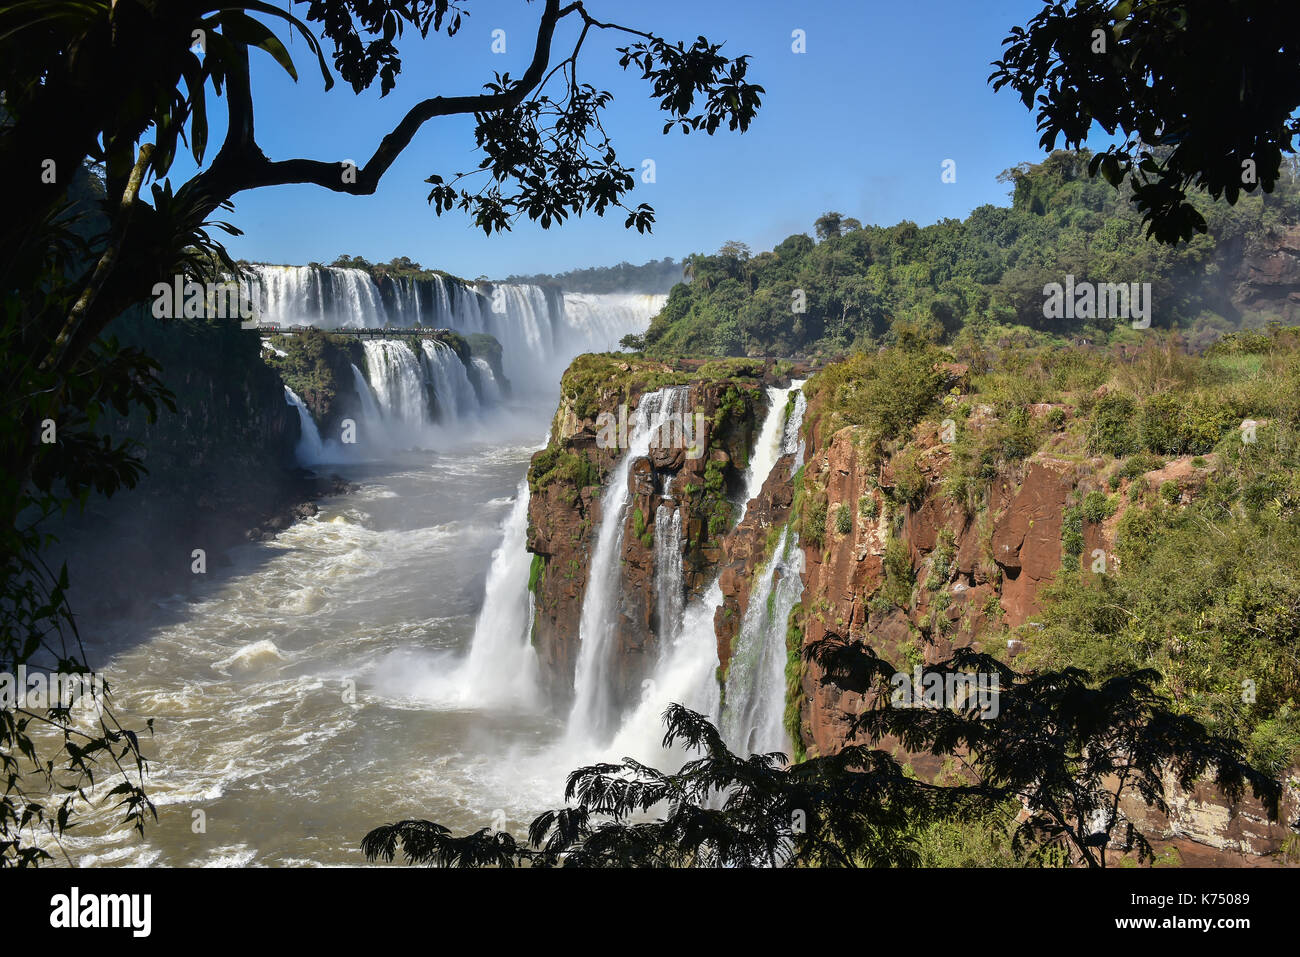 View of the Garganta del Diablo, Devil's Gap, Iguazu Falls, Puerto Iguazu, Argentina Stock Photo